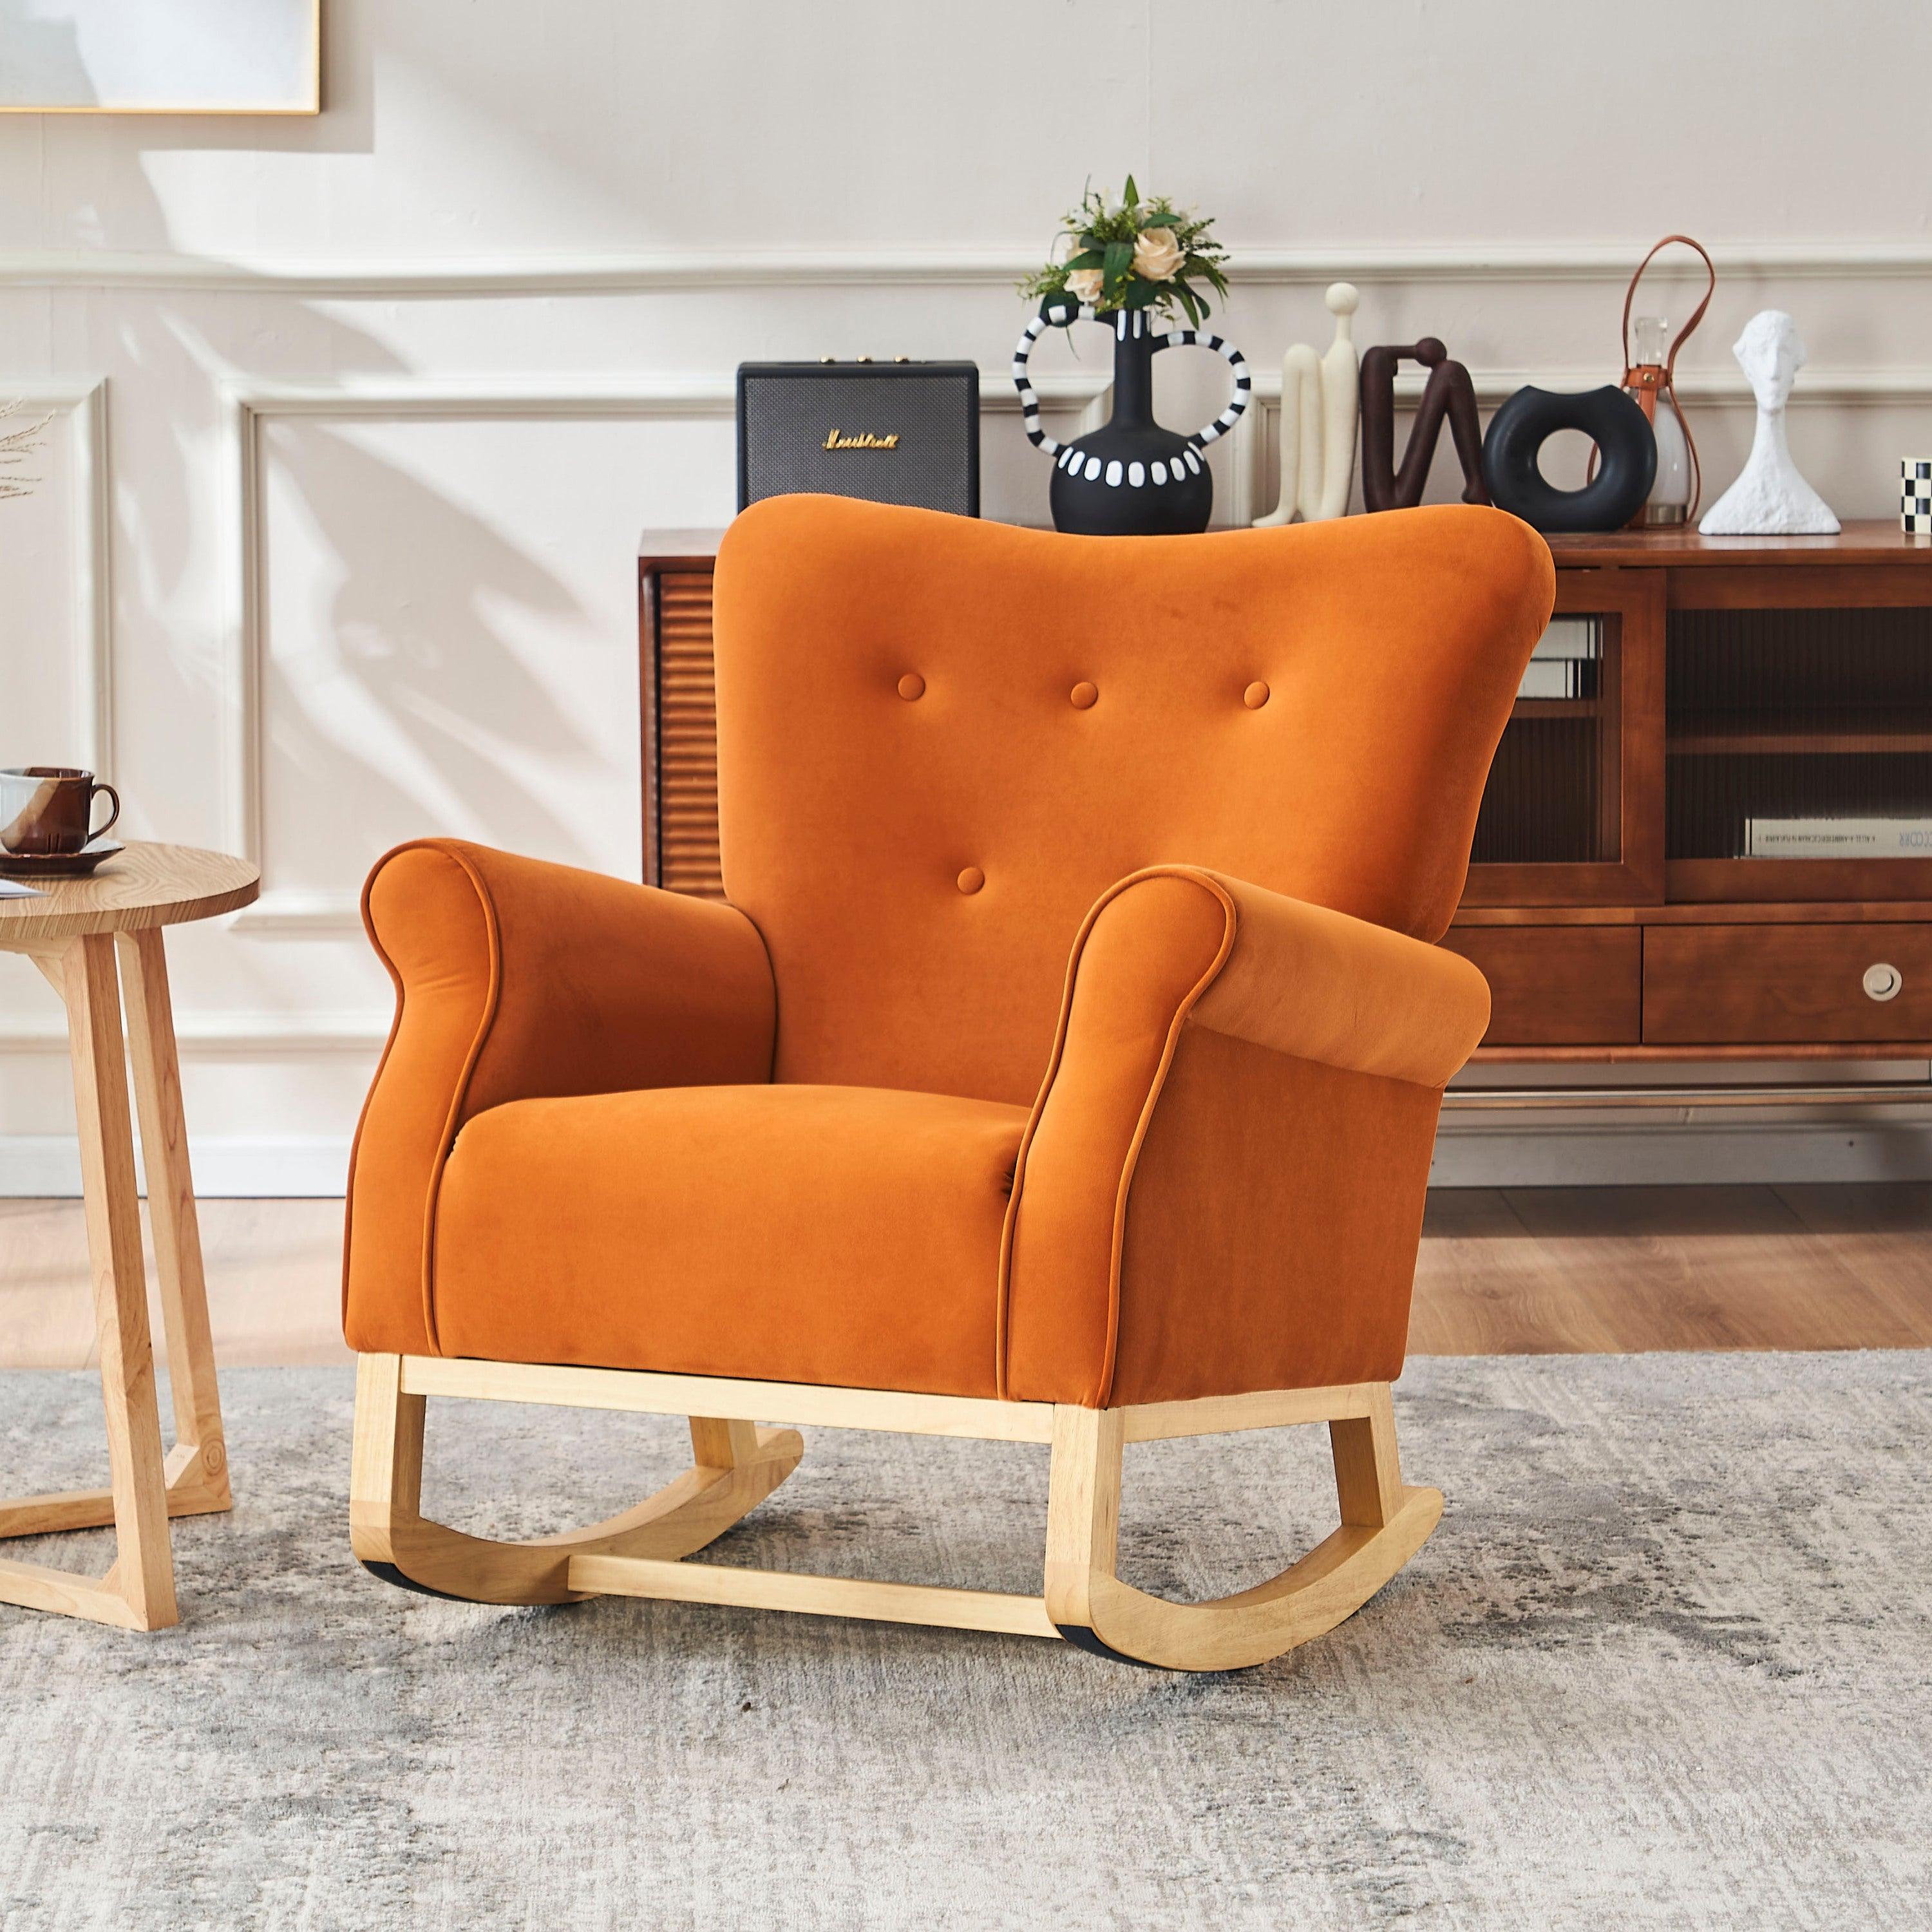 🆓🚛 Baby Room High Back Rocking Chair Nursery Chair, Comfortable Rocker Fabric Padded Seat, Orange